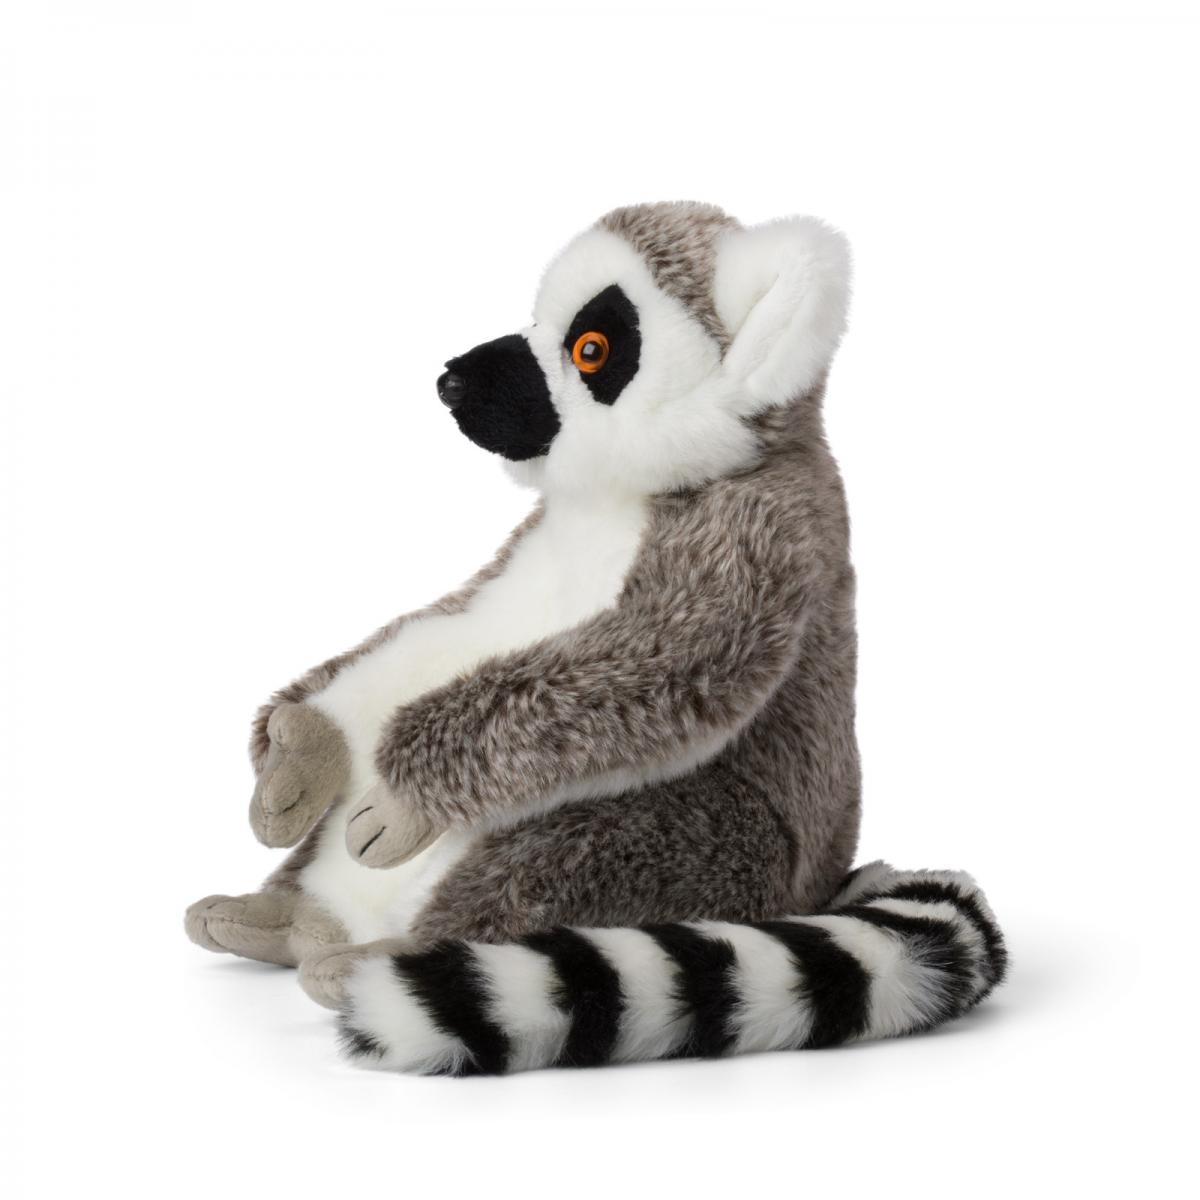 Lemur - WWF (Vrldsnaturfonden)